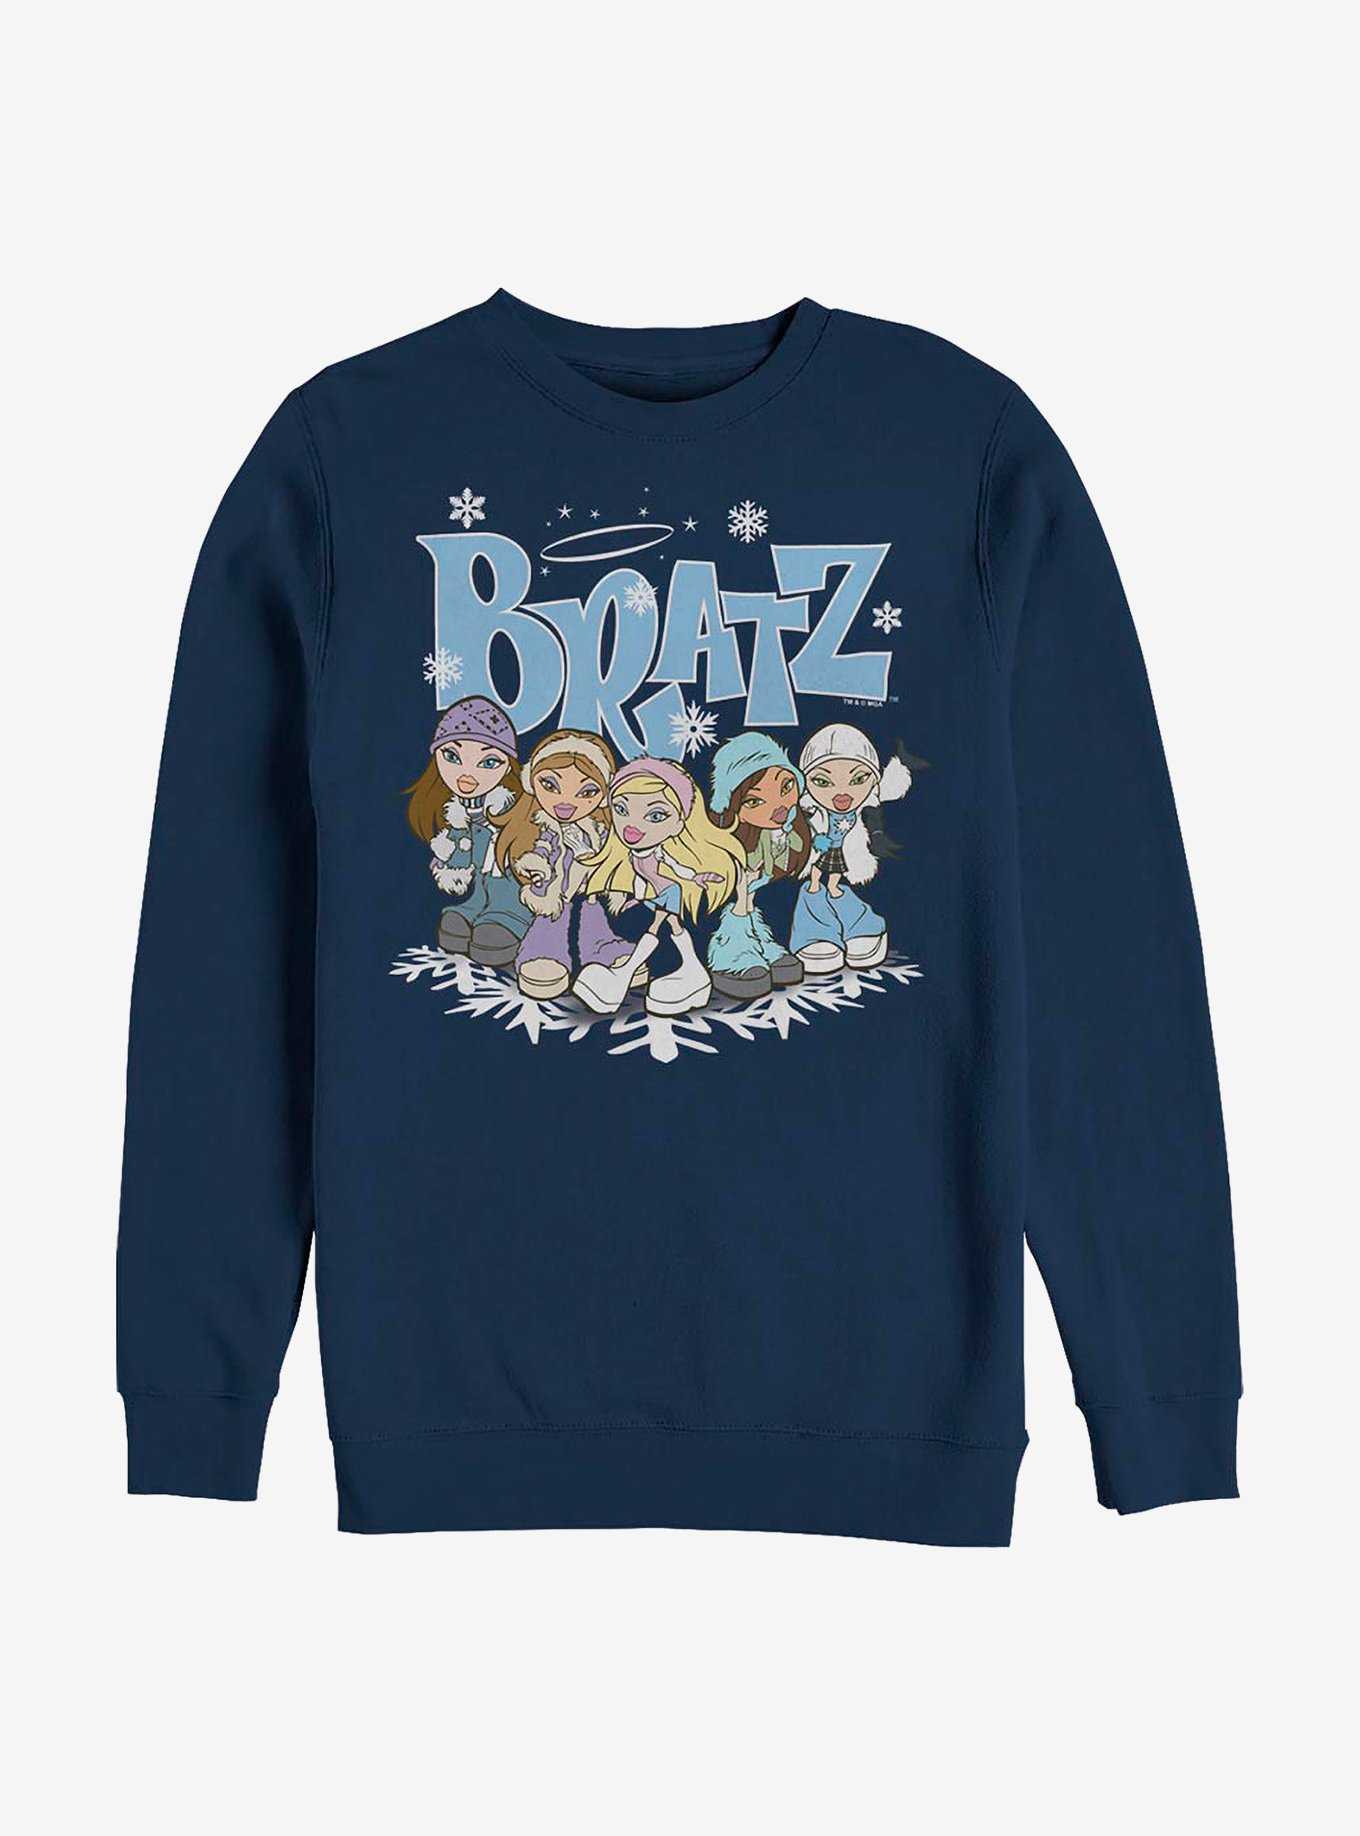 Bratz Rock Angelz Shirt, hoodie, sweater, longsleeve and V-neck T